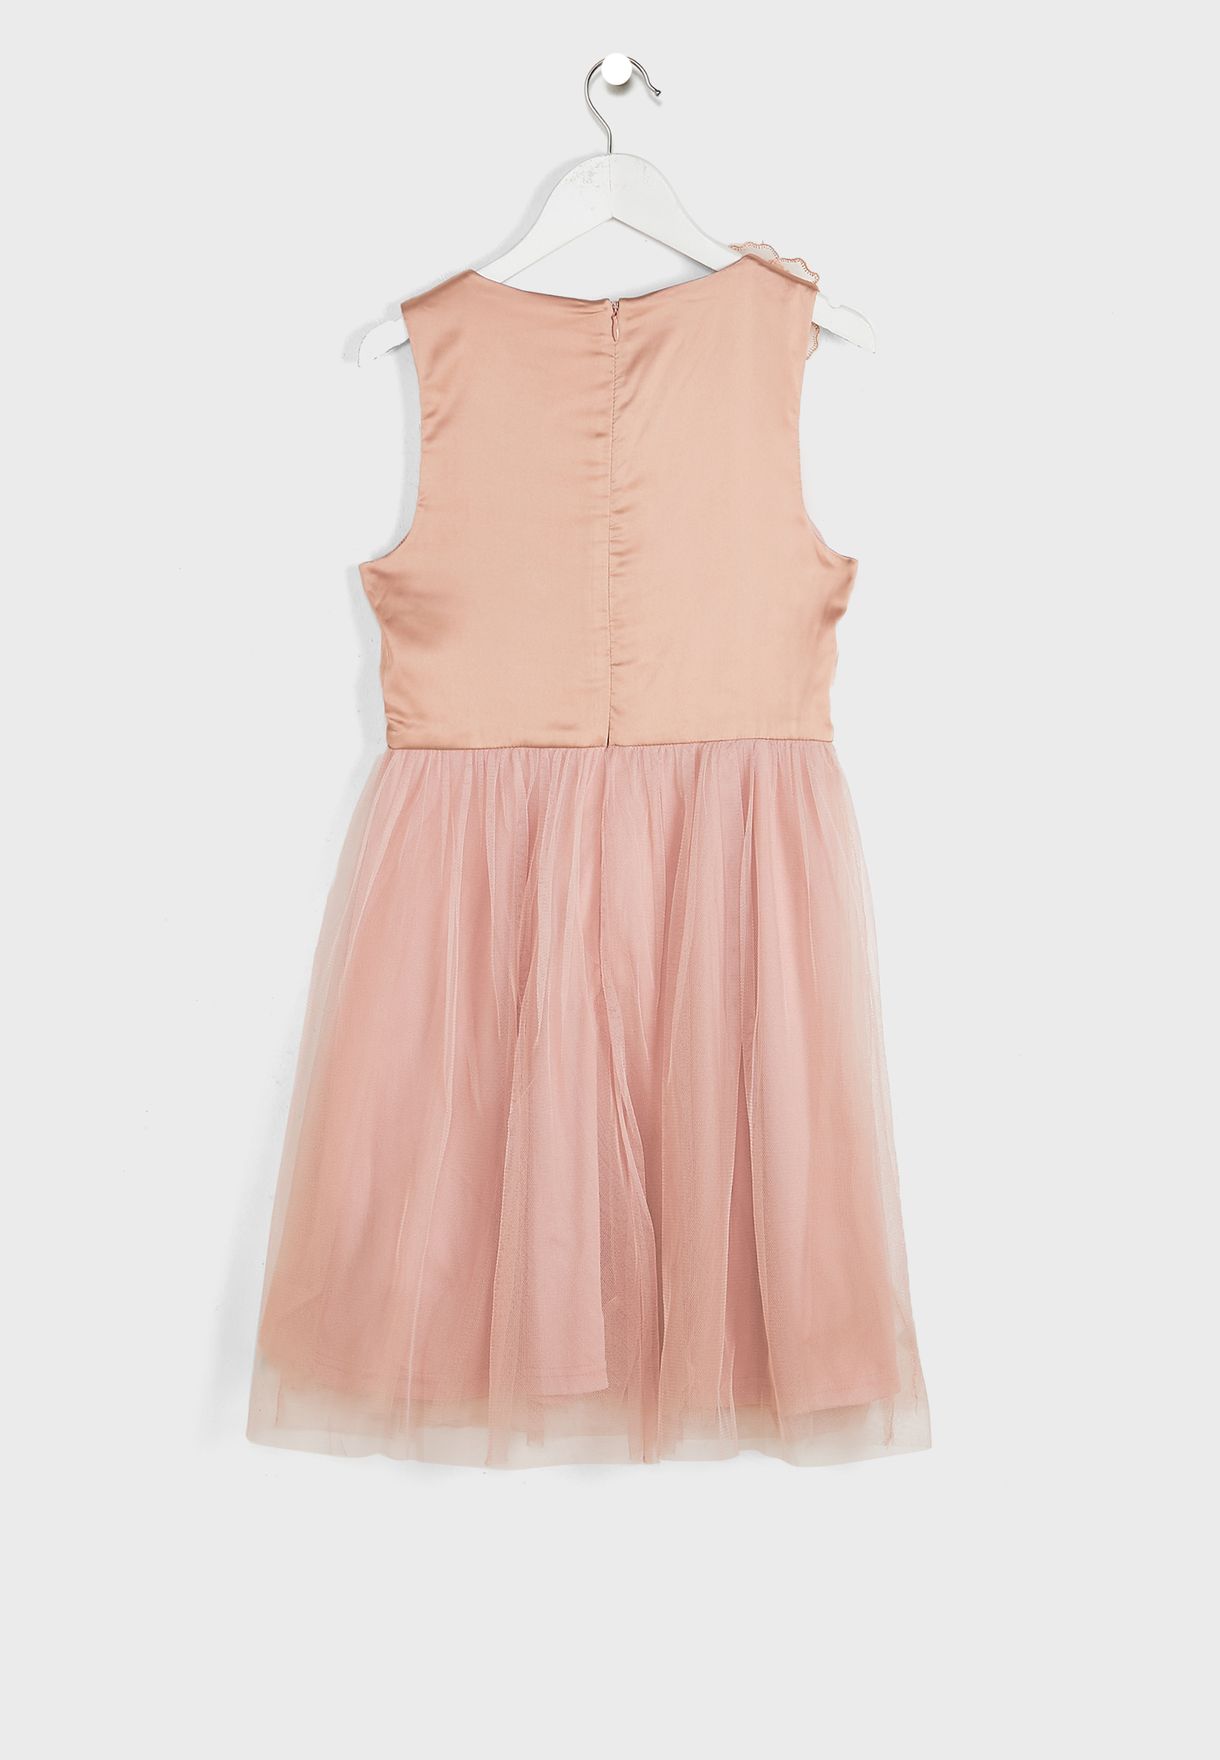 Kids 3D Floral Tulle Skirt Dress